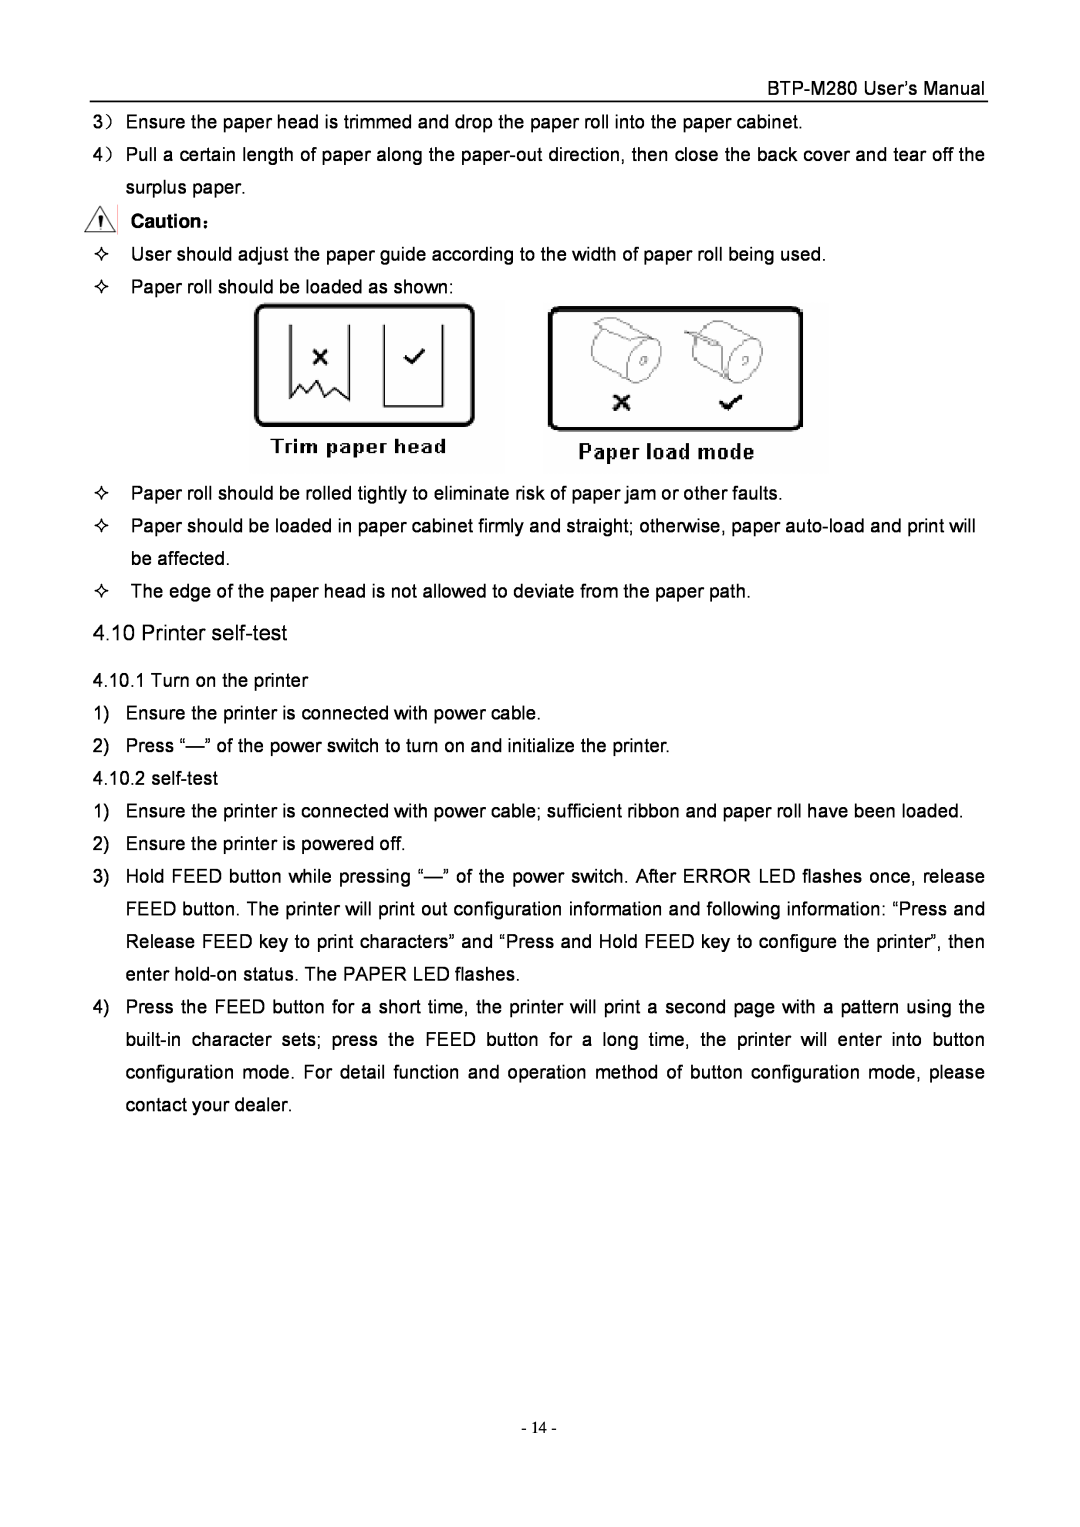 Jiaye General Merchandise Co BTP-M280 user manual Printer self-test, Caution： 